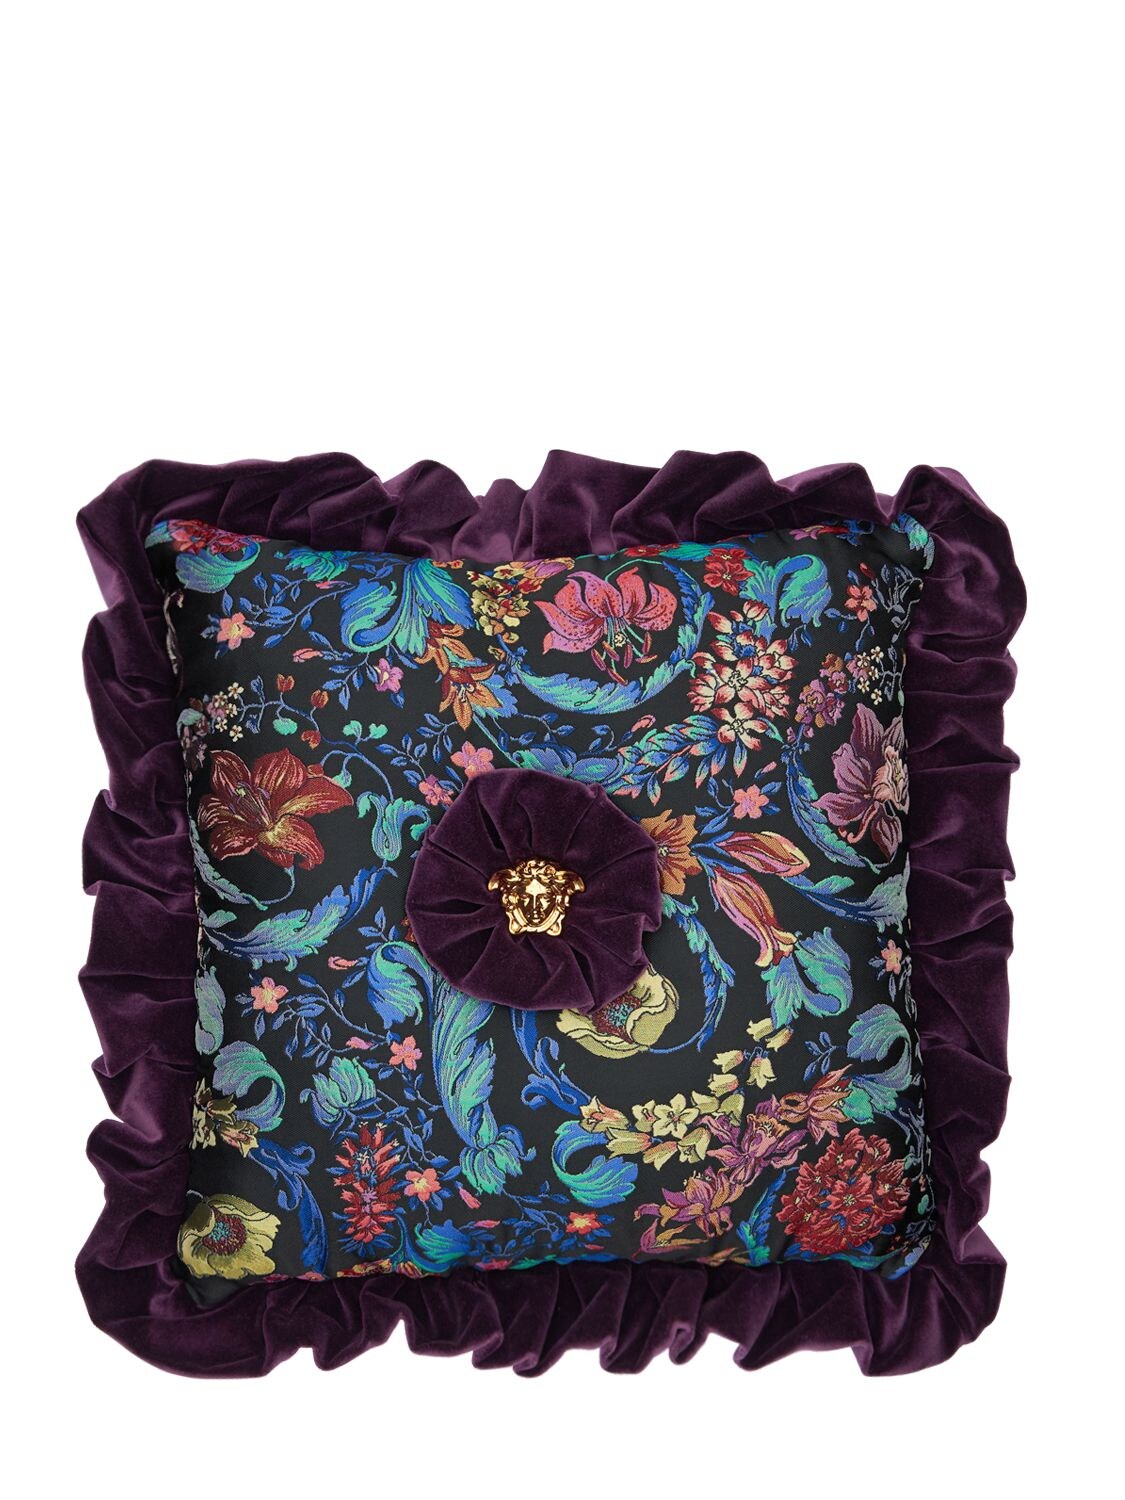 Versace Barocco Pillow In Purple